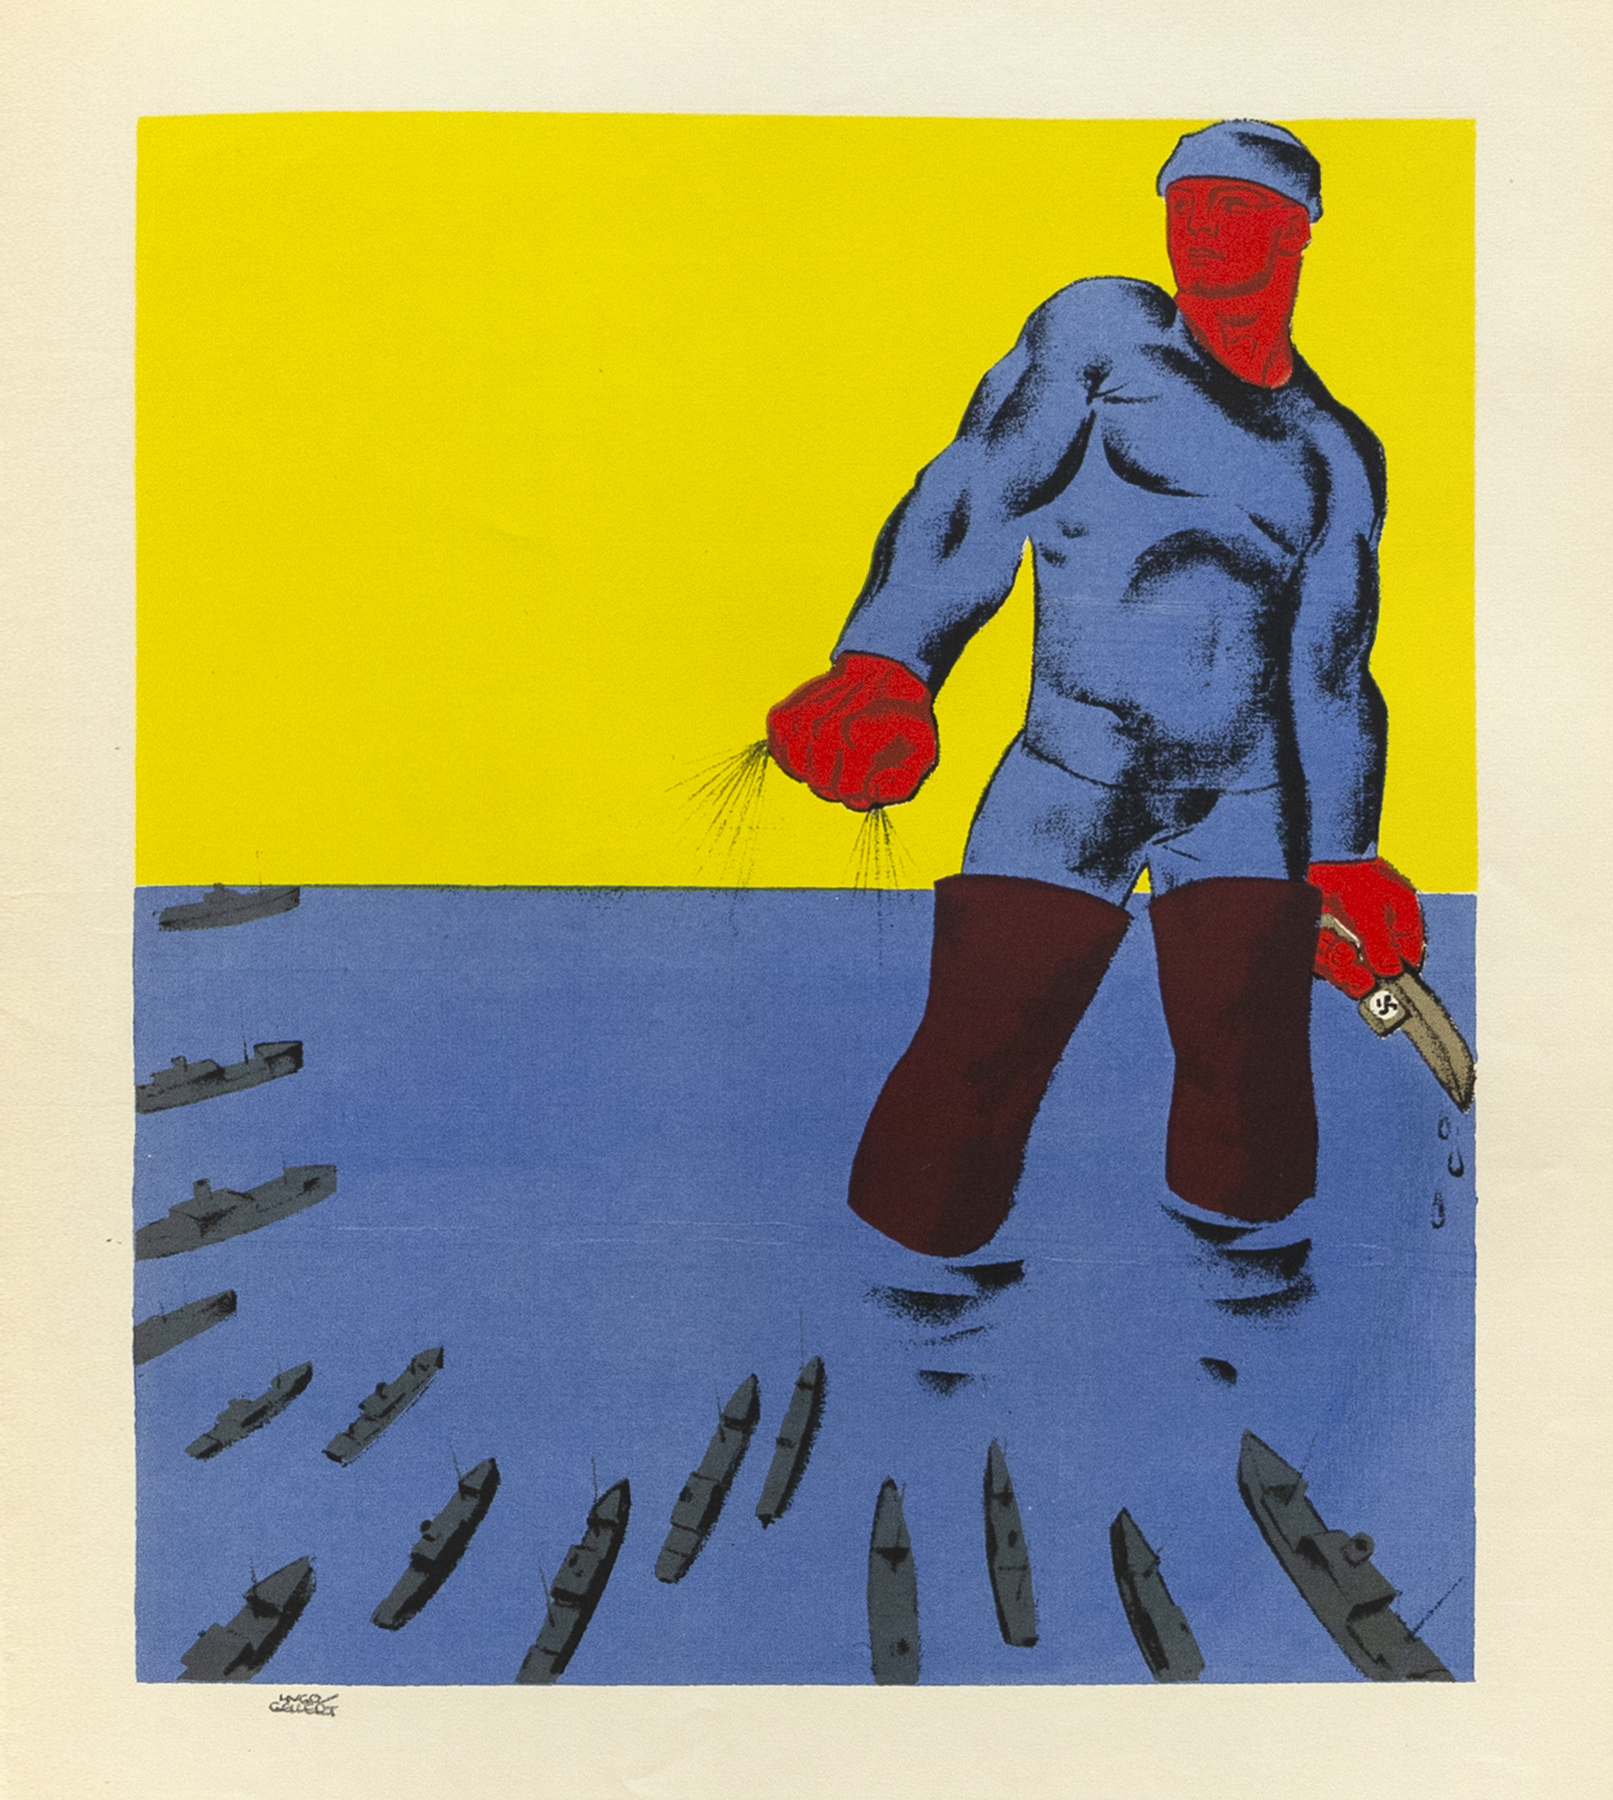 Free Man's Duties 2, 1943, Silkscreen, 15 1/4 x 13 inches (38.7 x 33 cm), Edition of 54